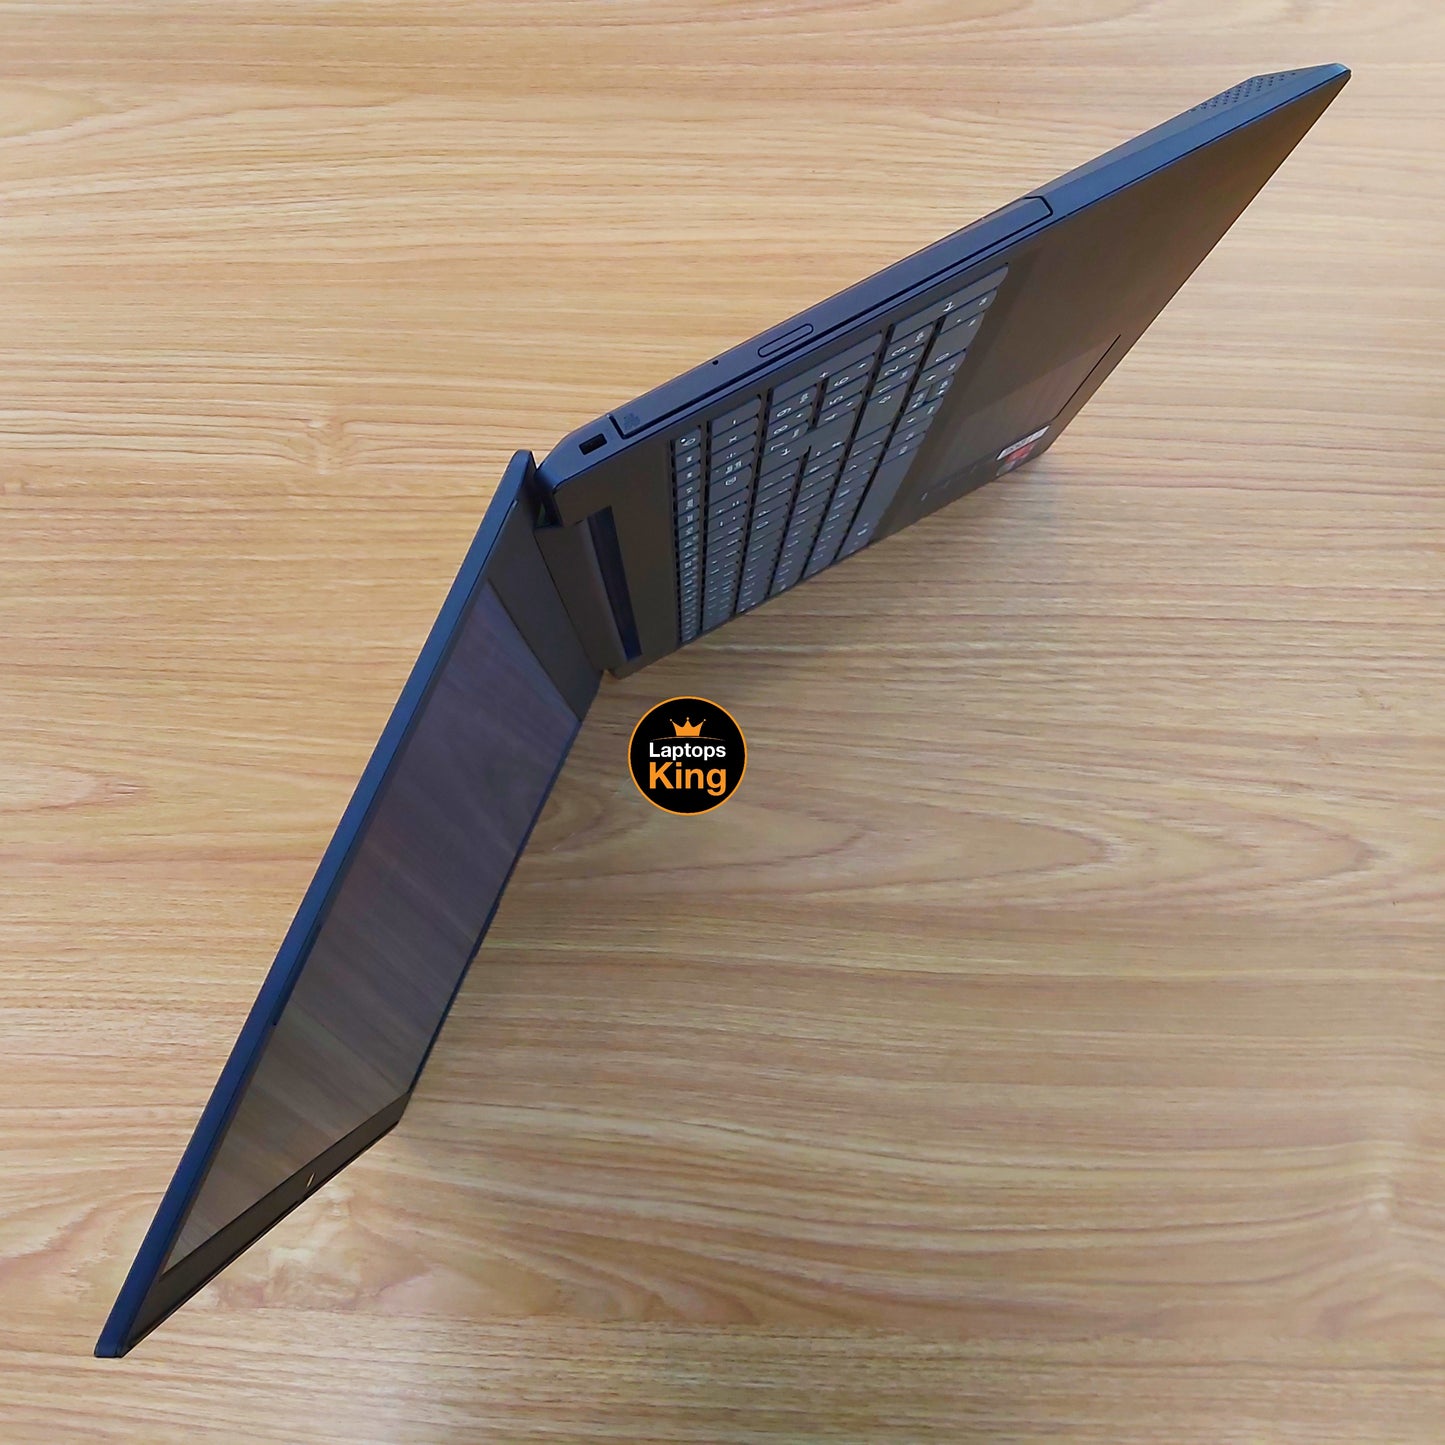 Lenovo IdeaPad L340 81lw Ryzen 5 3500u Vega 8 Laptop (Open Box)